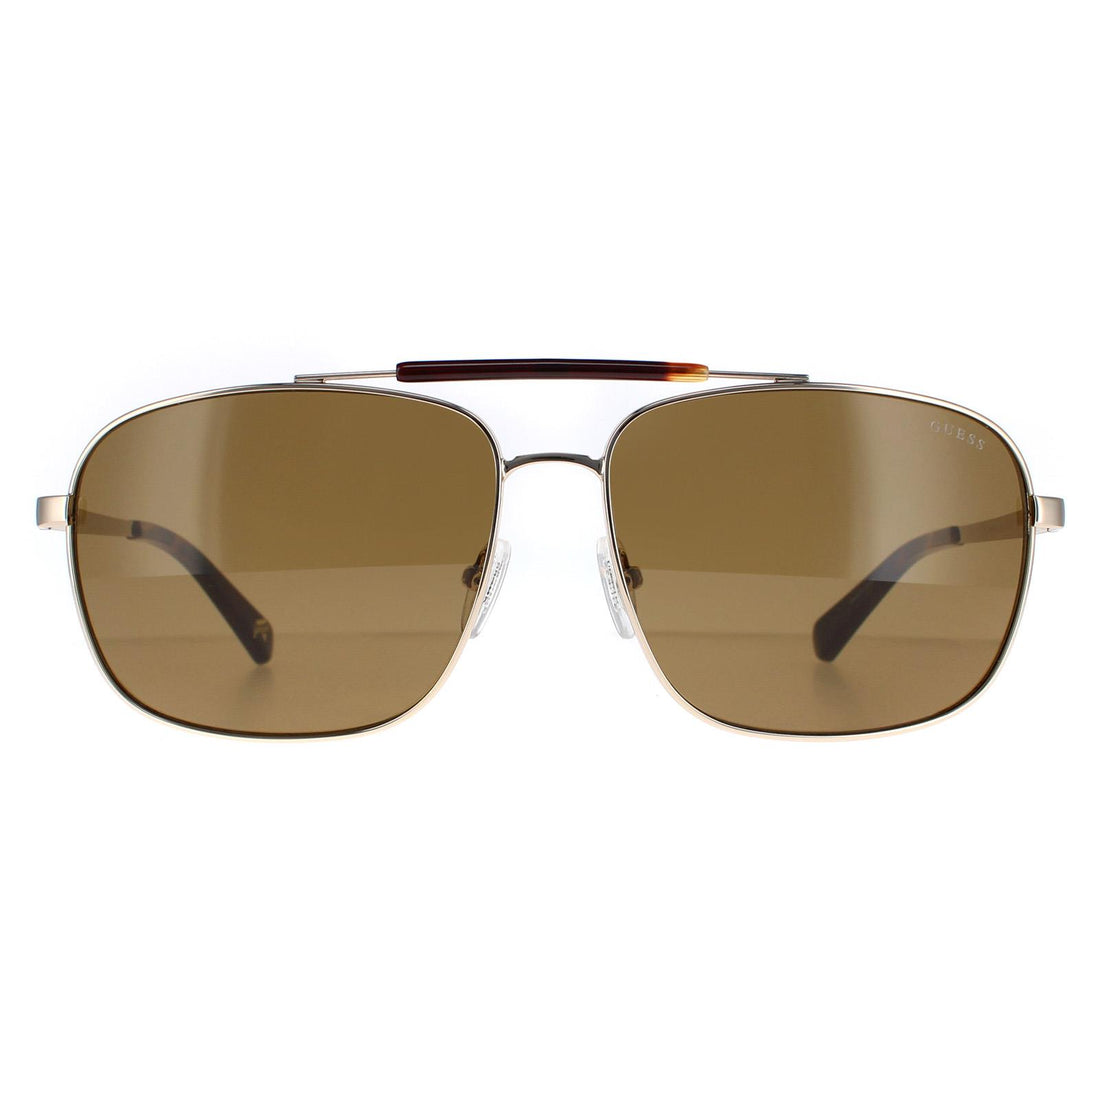 Guess Sunglasses GU5210 32E Gold Brown